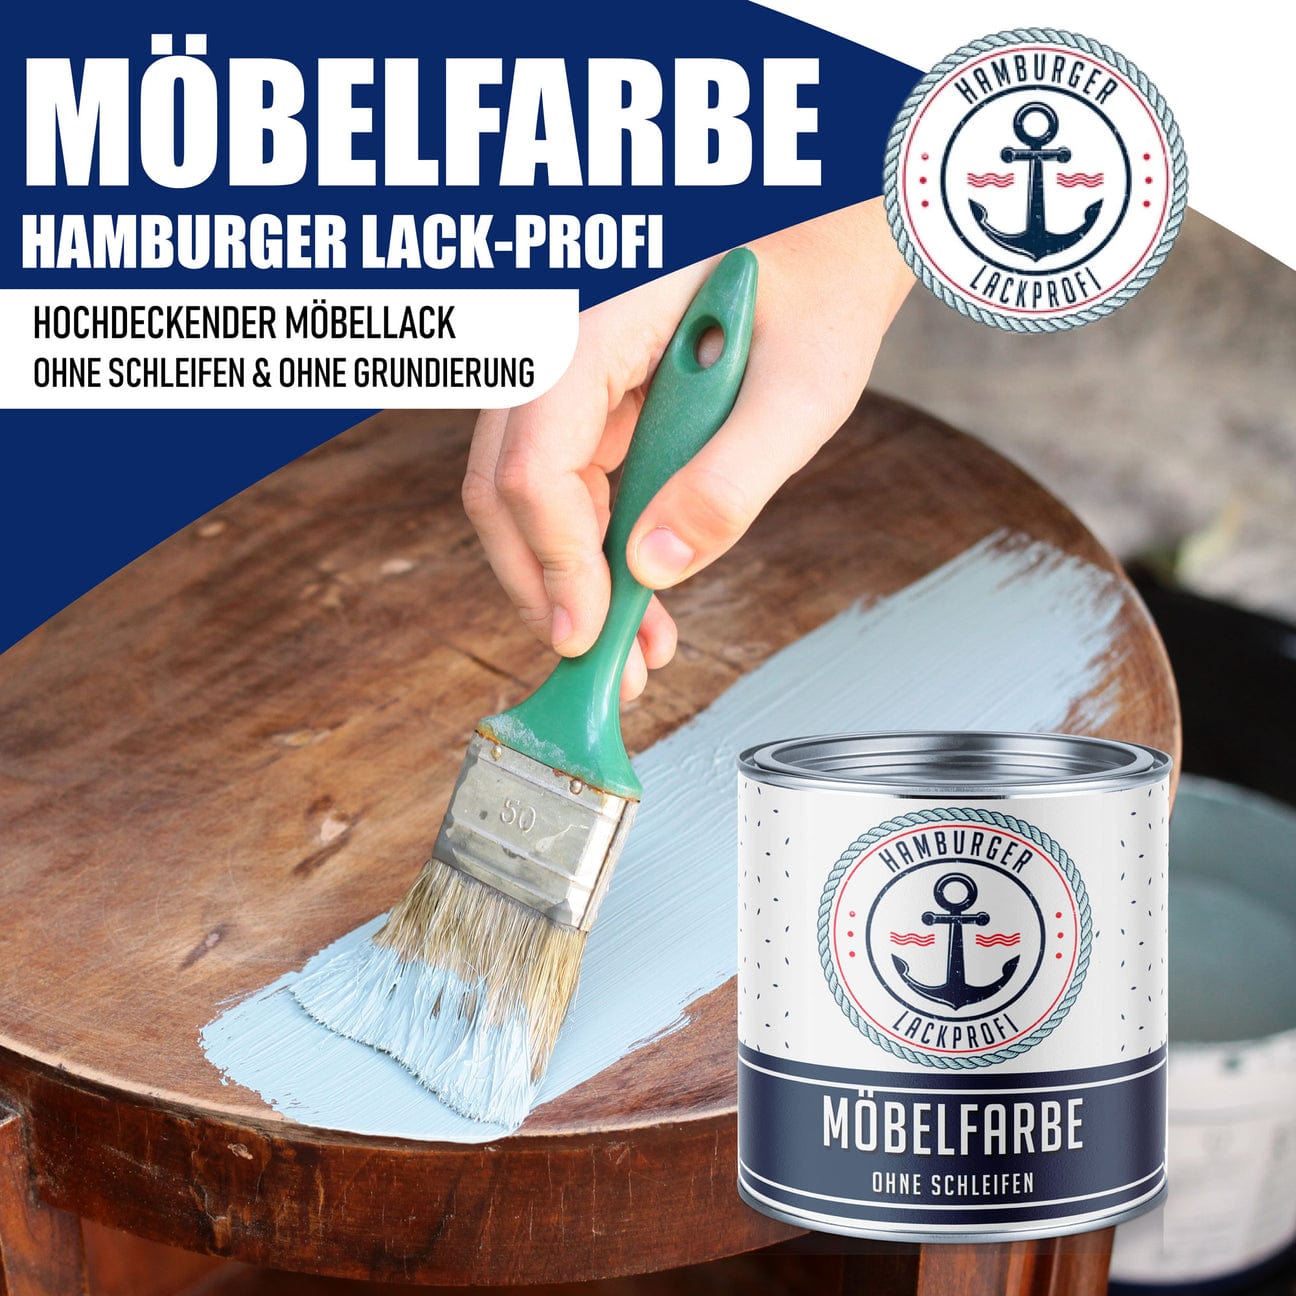 Hamburger Lack-Profi Möbelfarbe ohne Schleifen RAL 5019 Capriblau - Möbellack Hamburger Lack-Profi